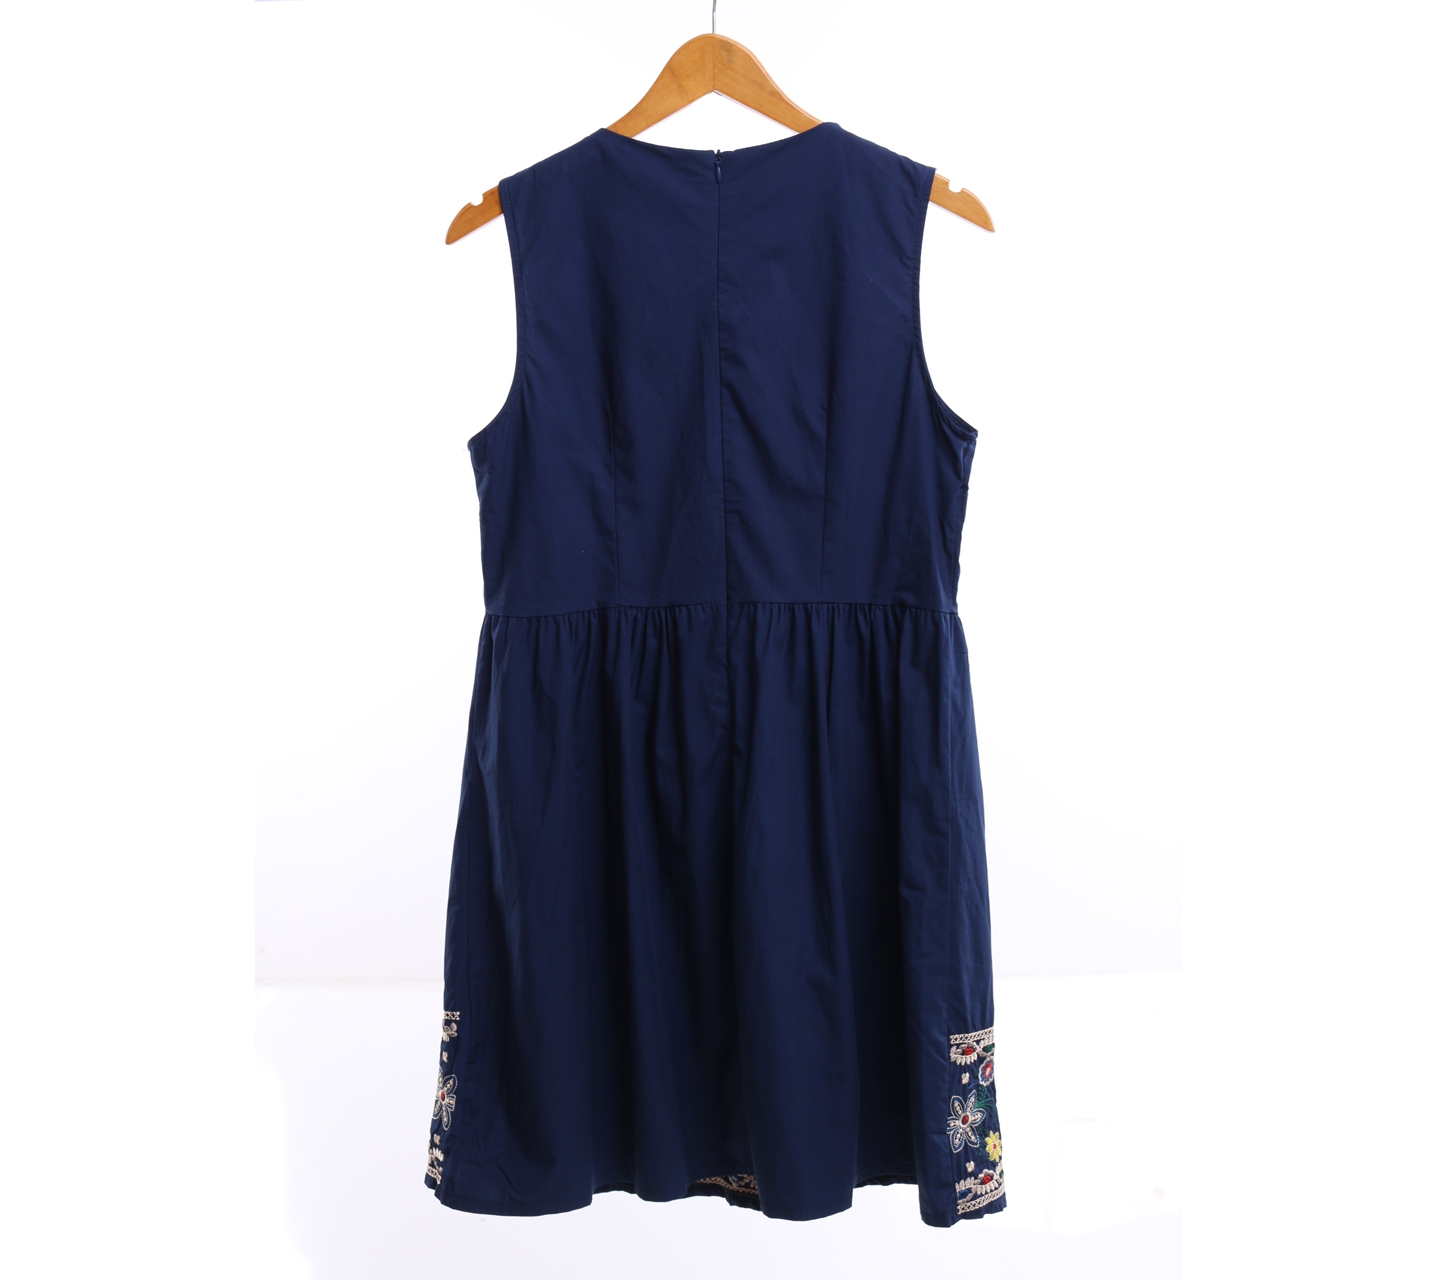 Arithalia Dark Blue Patterned Mini Dress